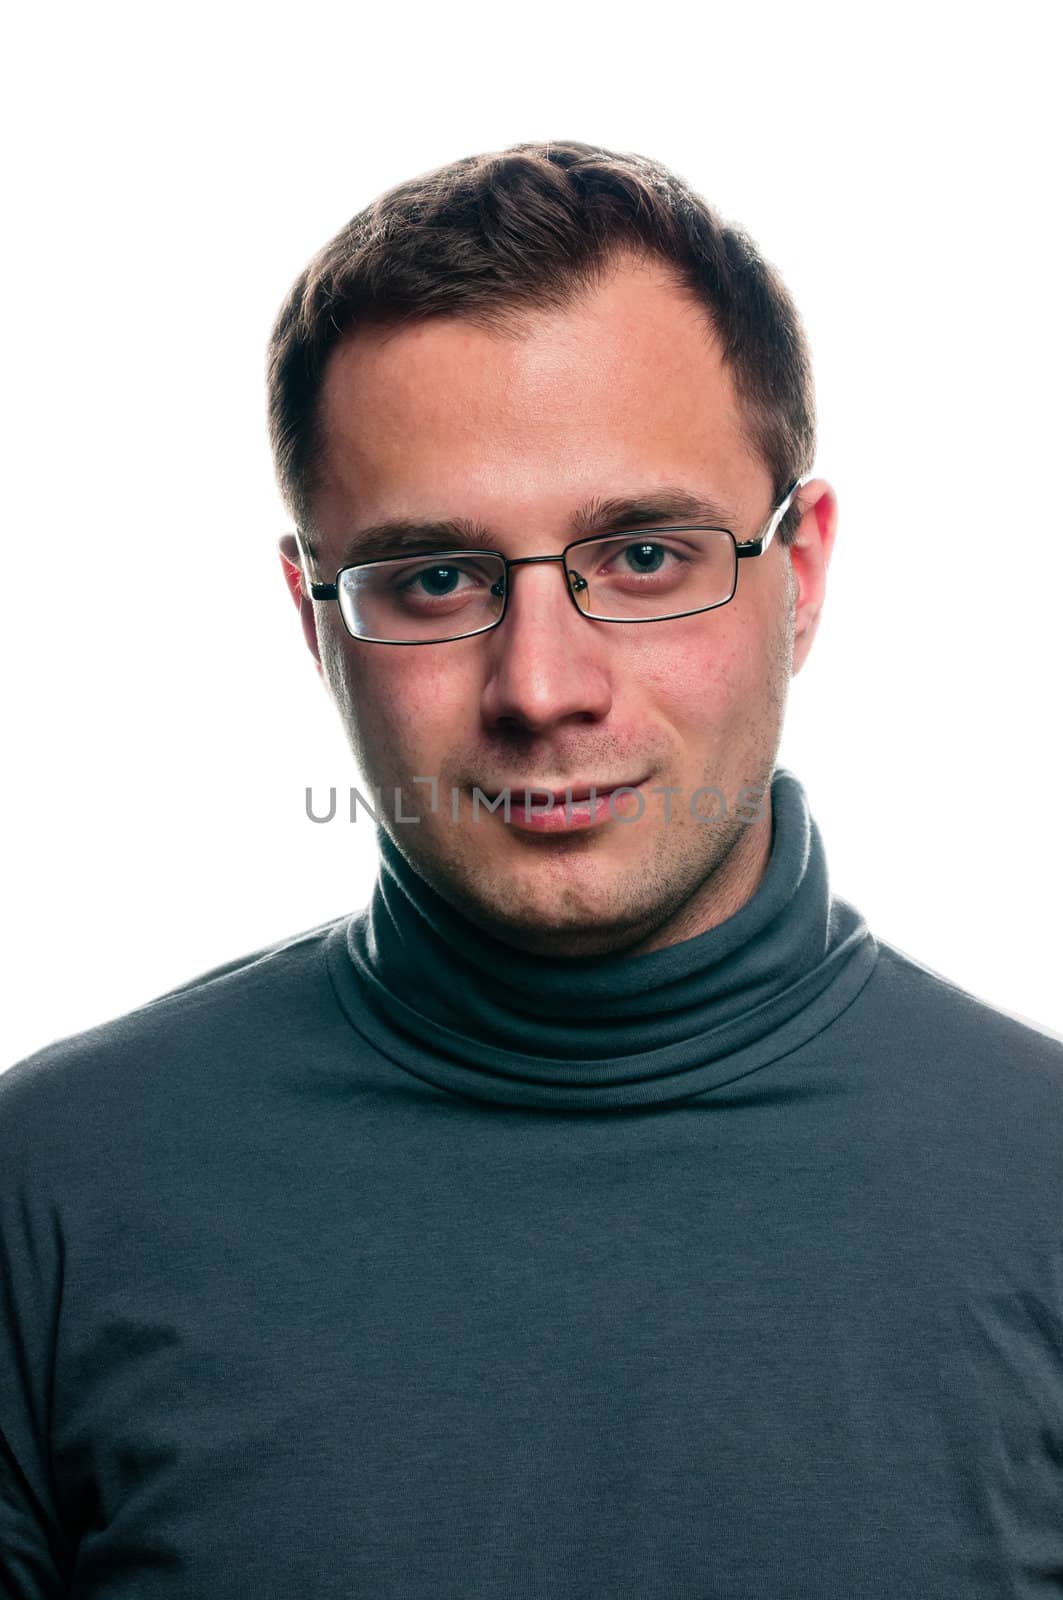 Isolated portrait of man in glasses by dmitryelagin